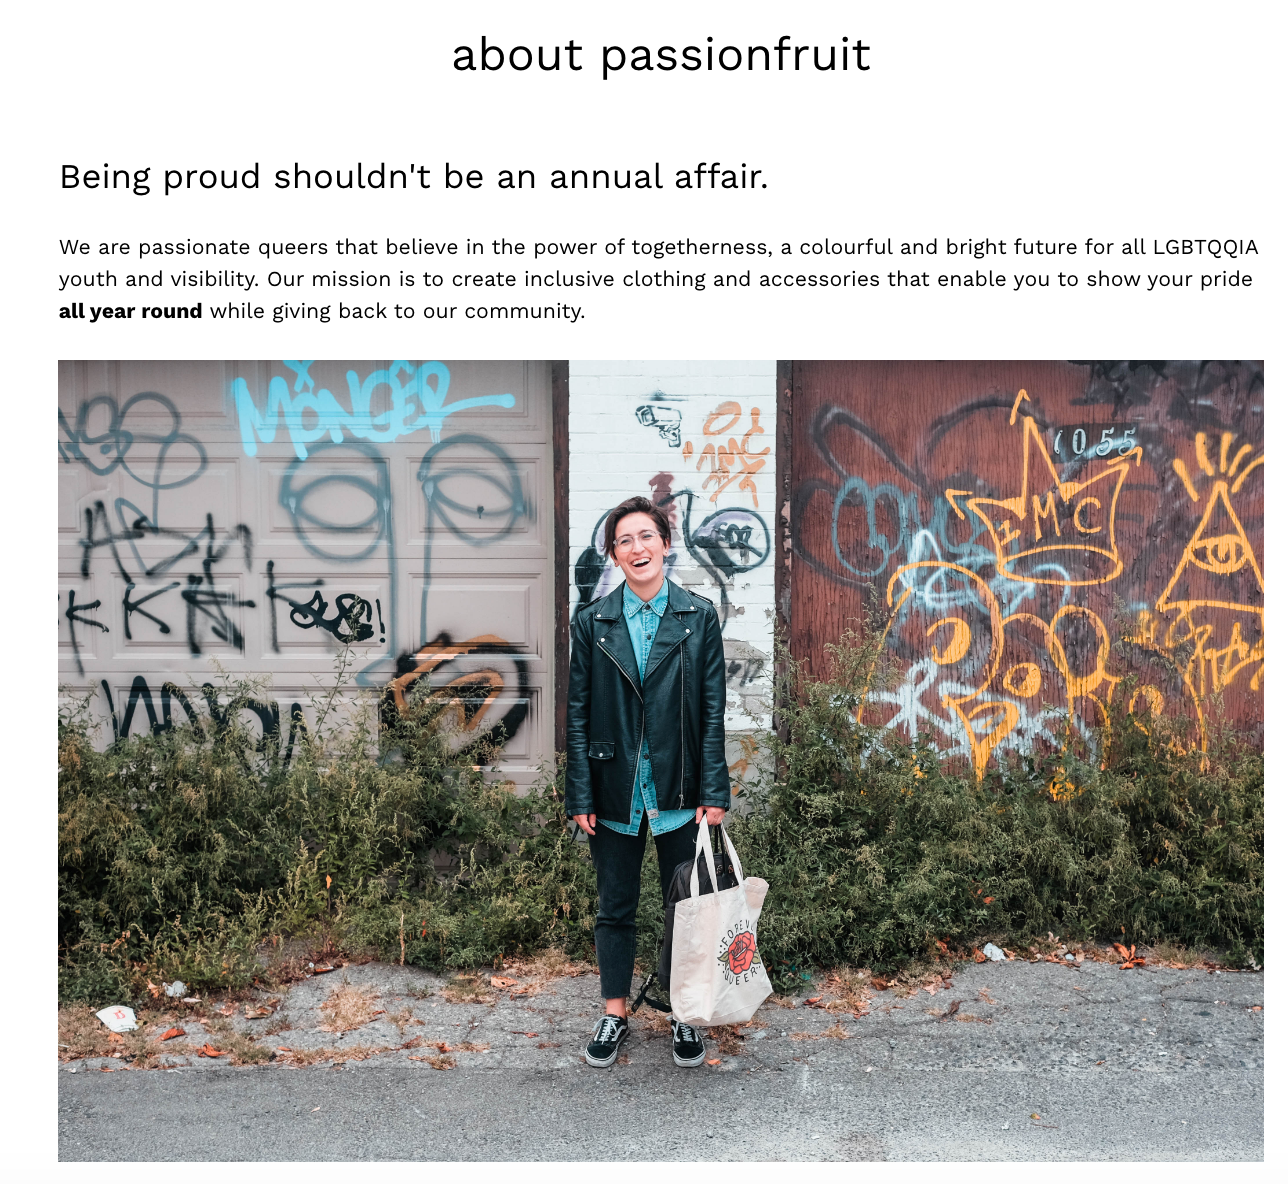 Passionfruit mission statement